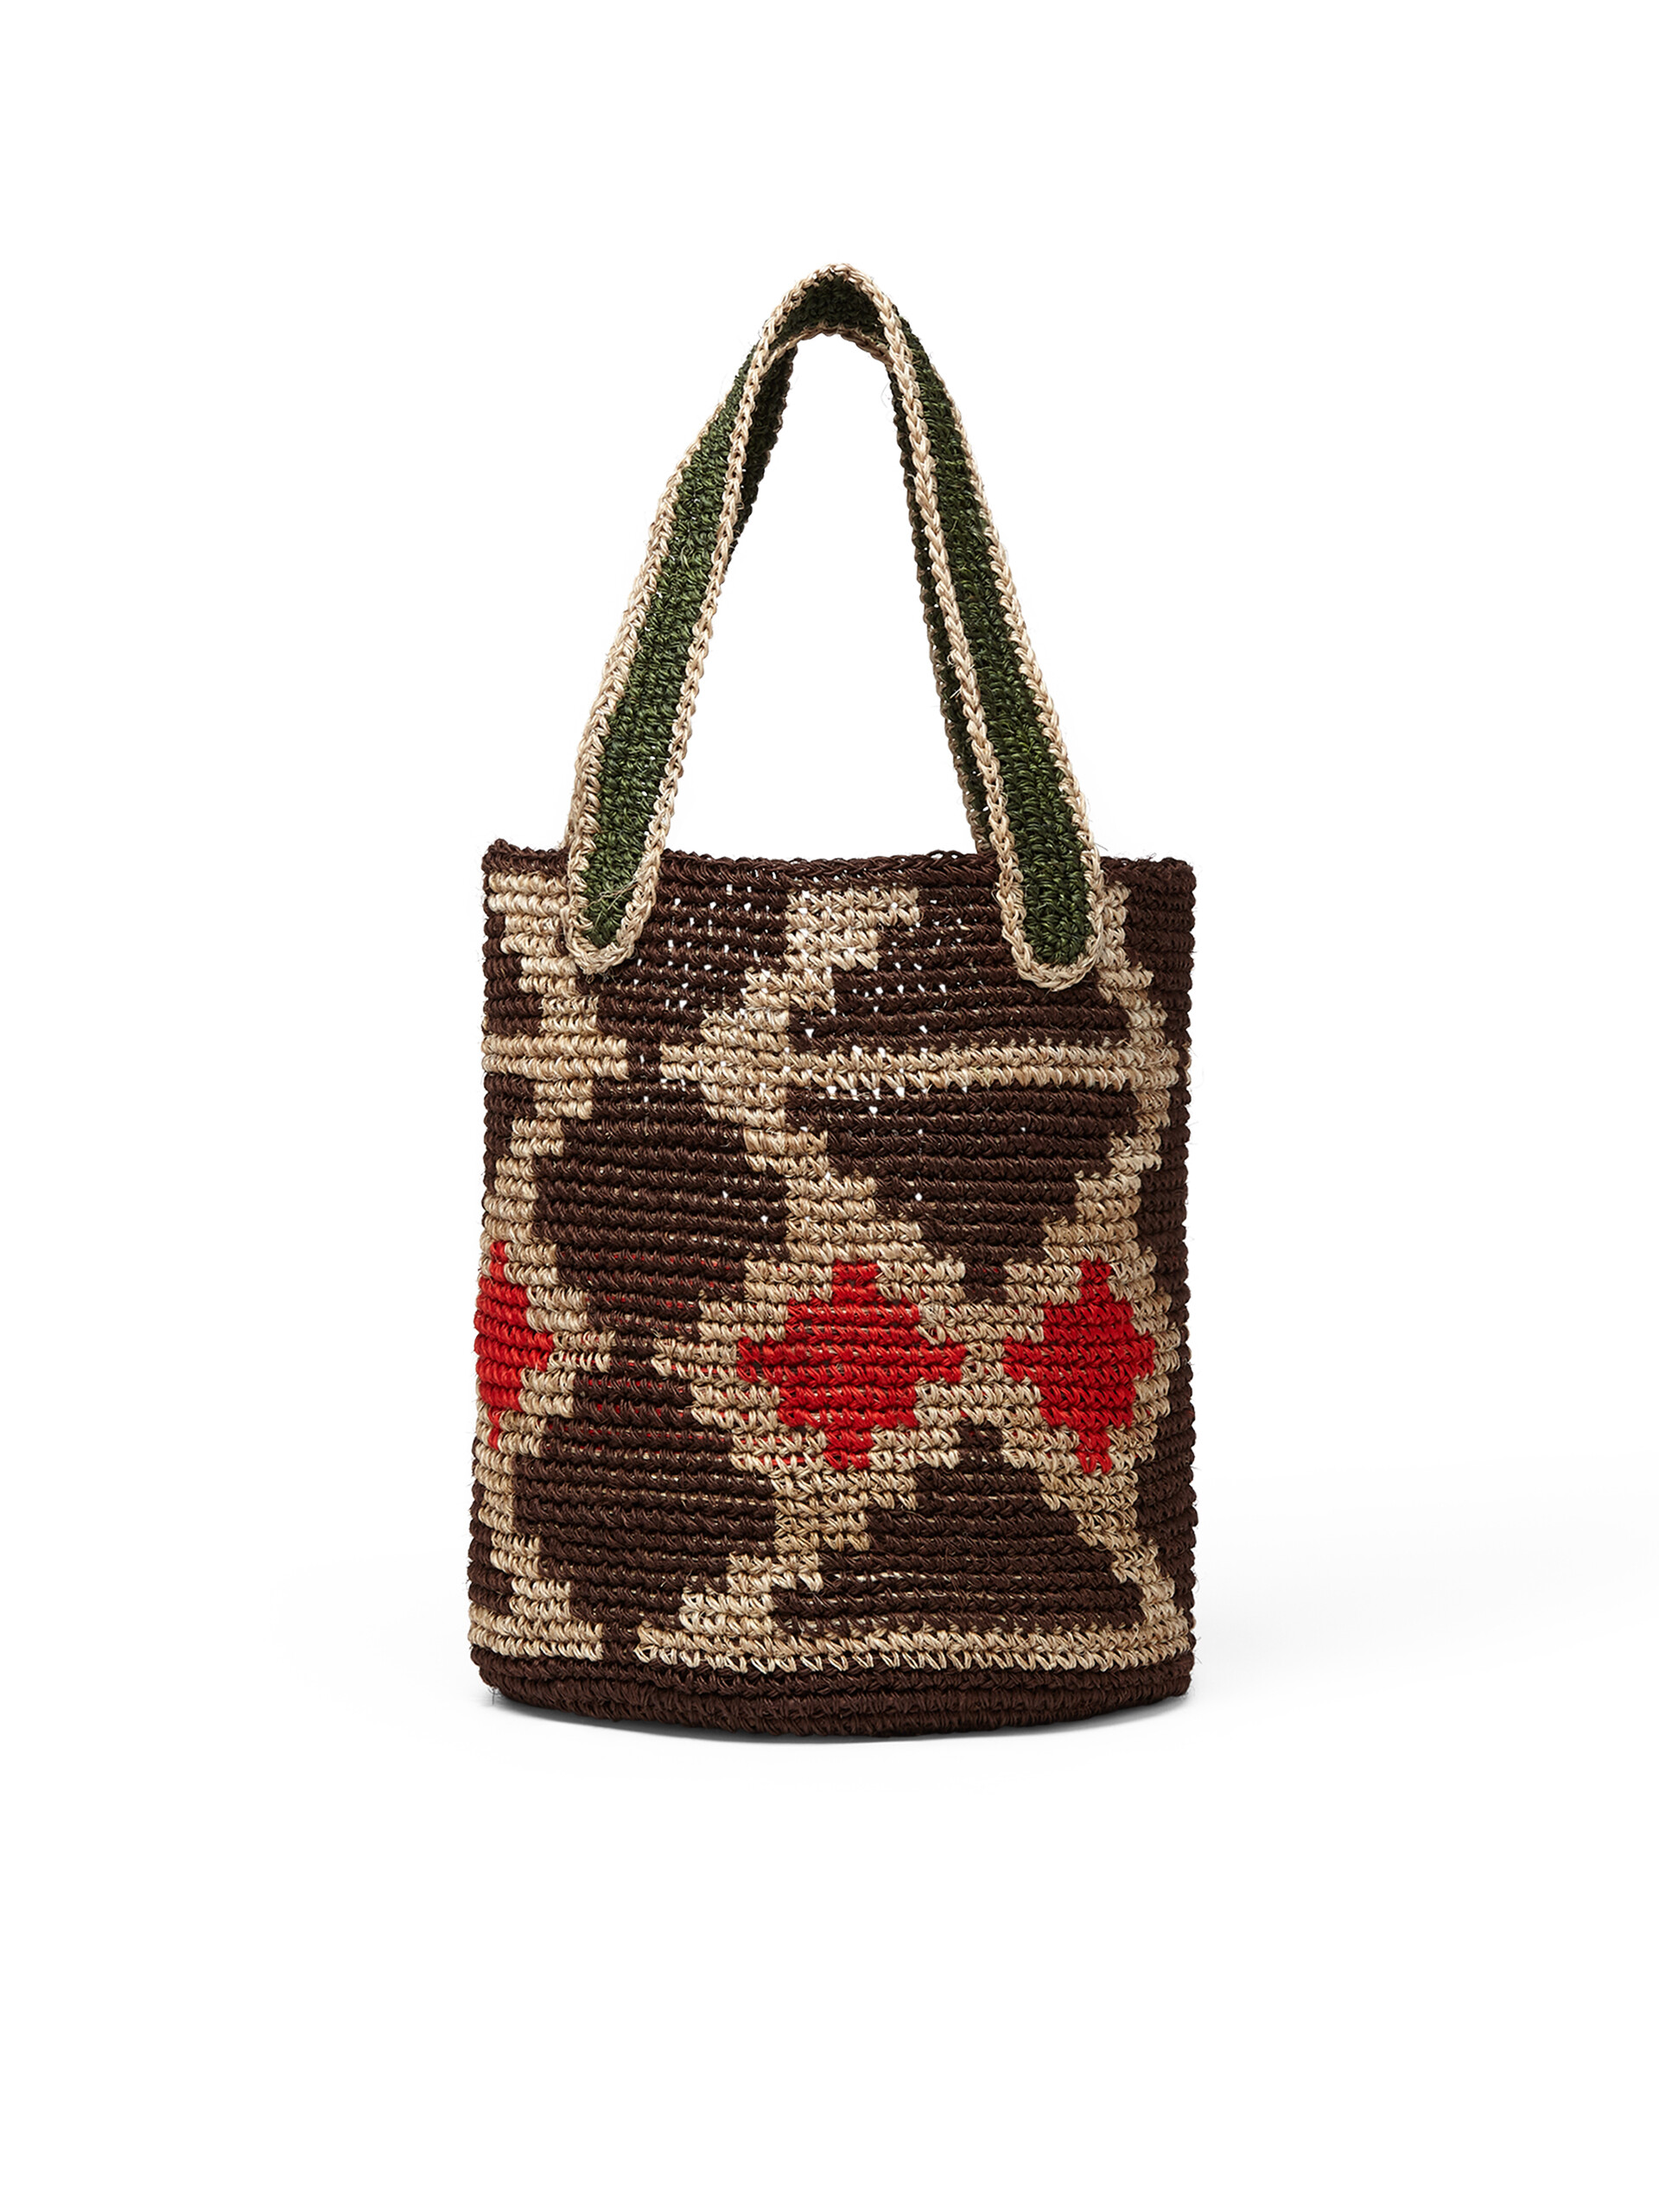 MARNI MARKET bag in multicolor brown natural fibre - Bags - Image 3